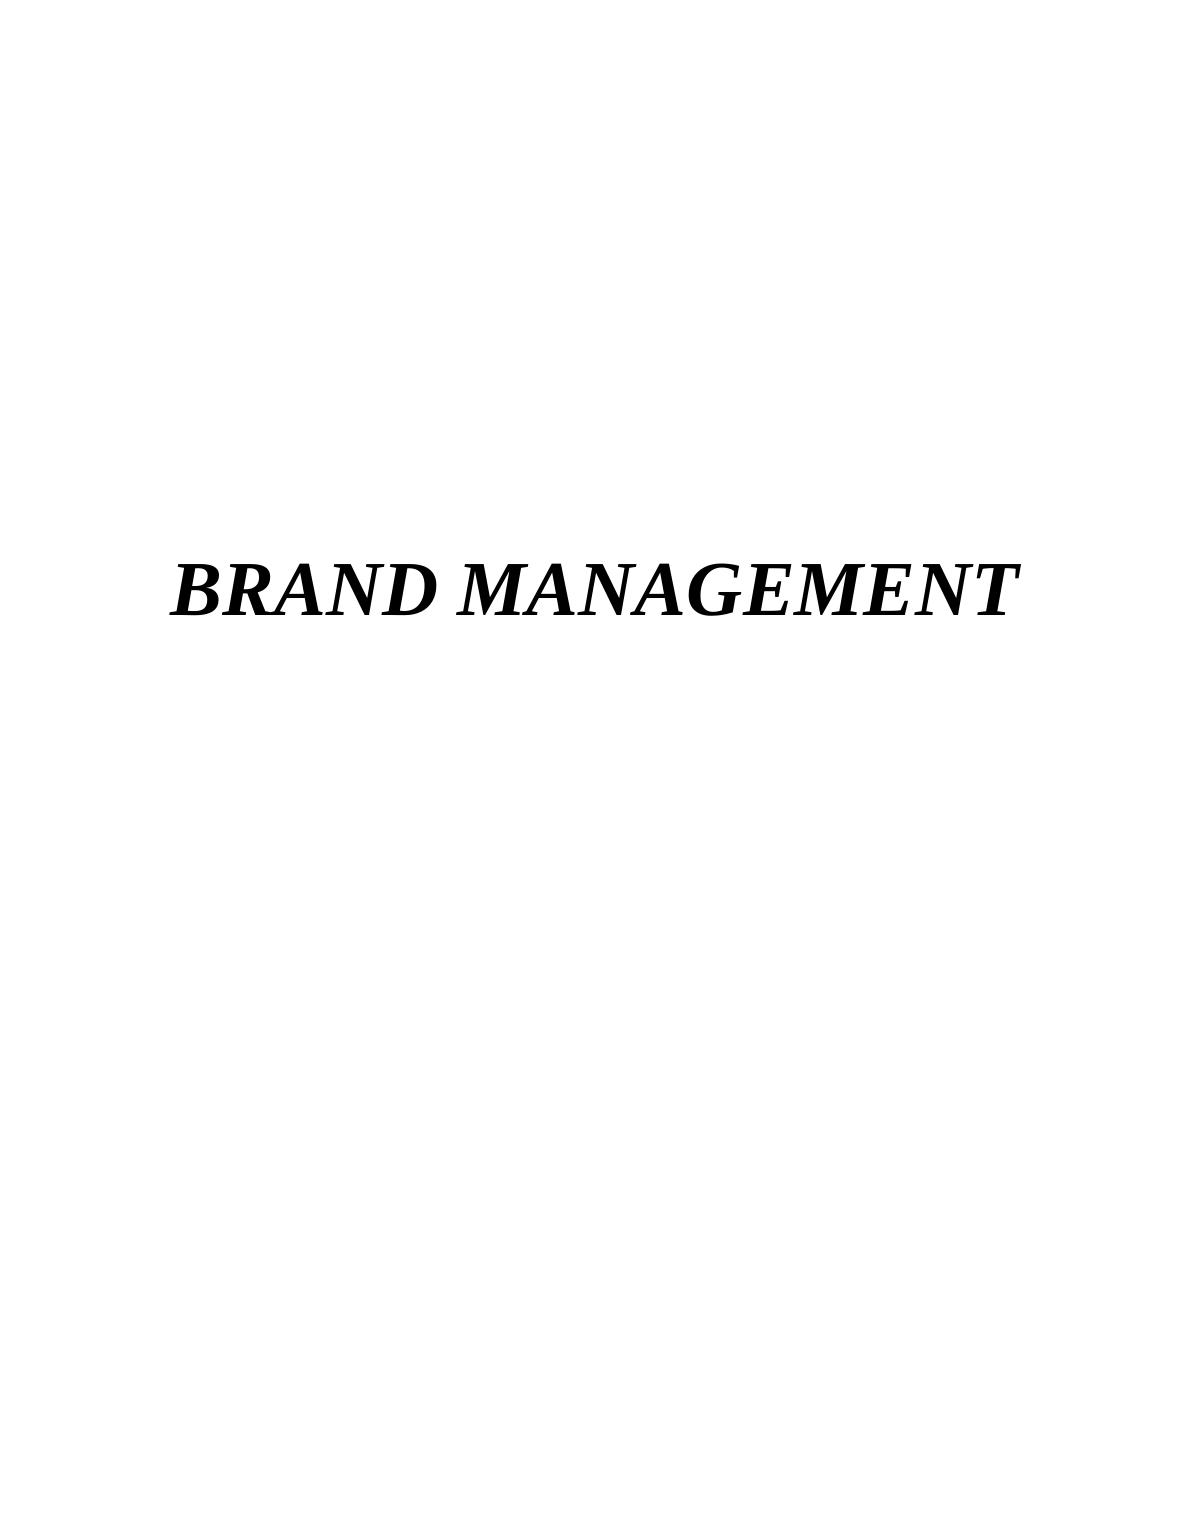 Report on Brand Marketing Tool - McDonald and Coca-Cola_1